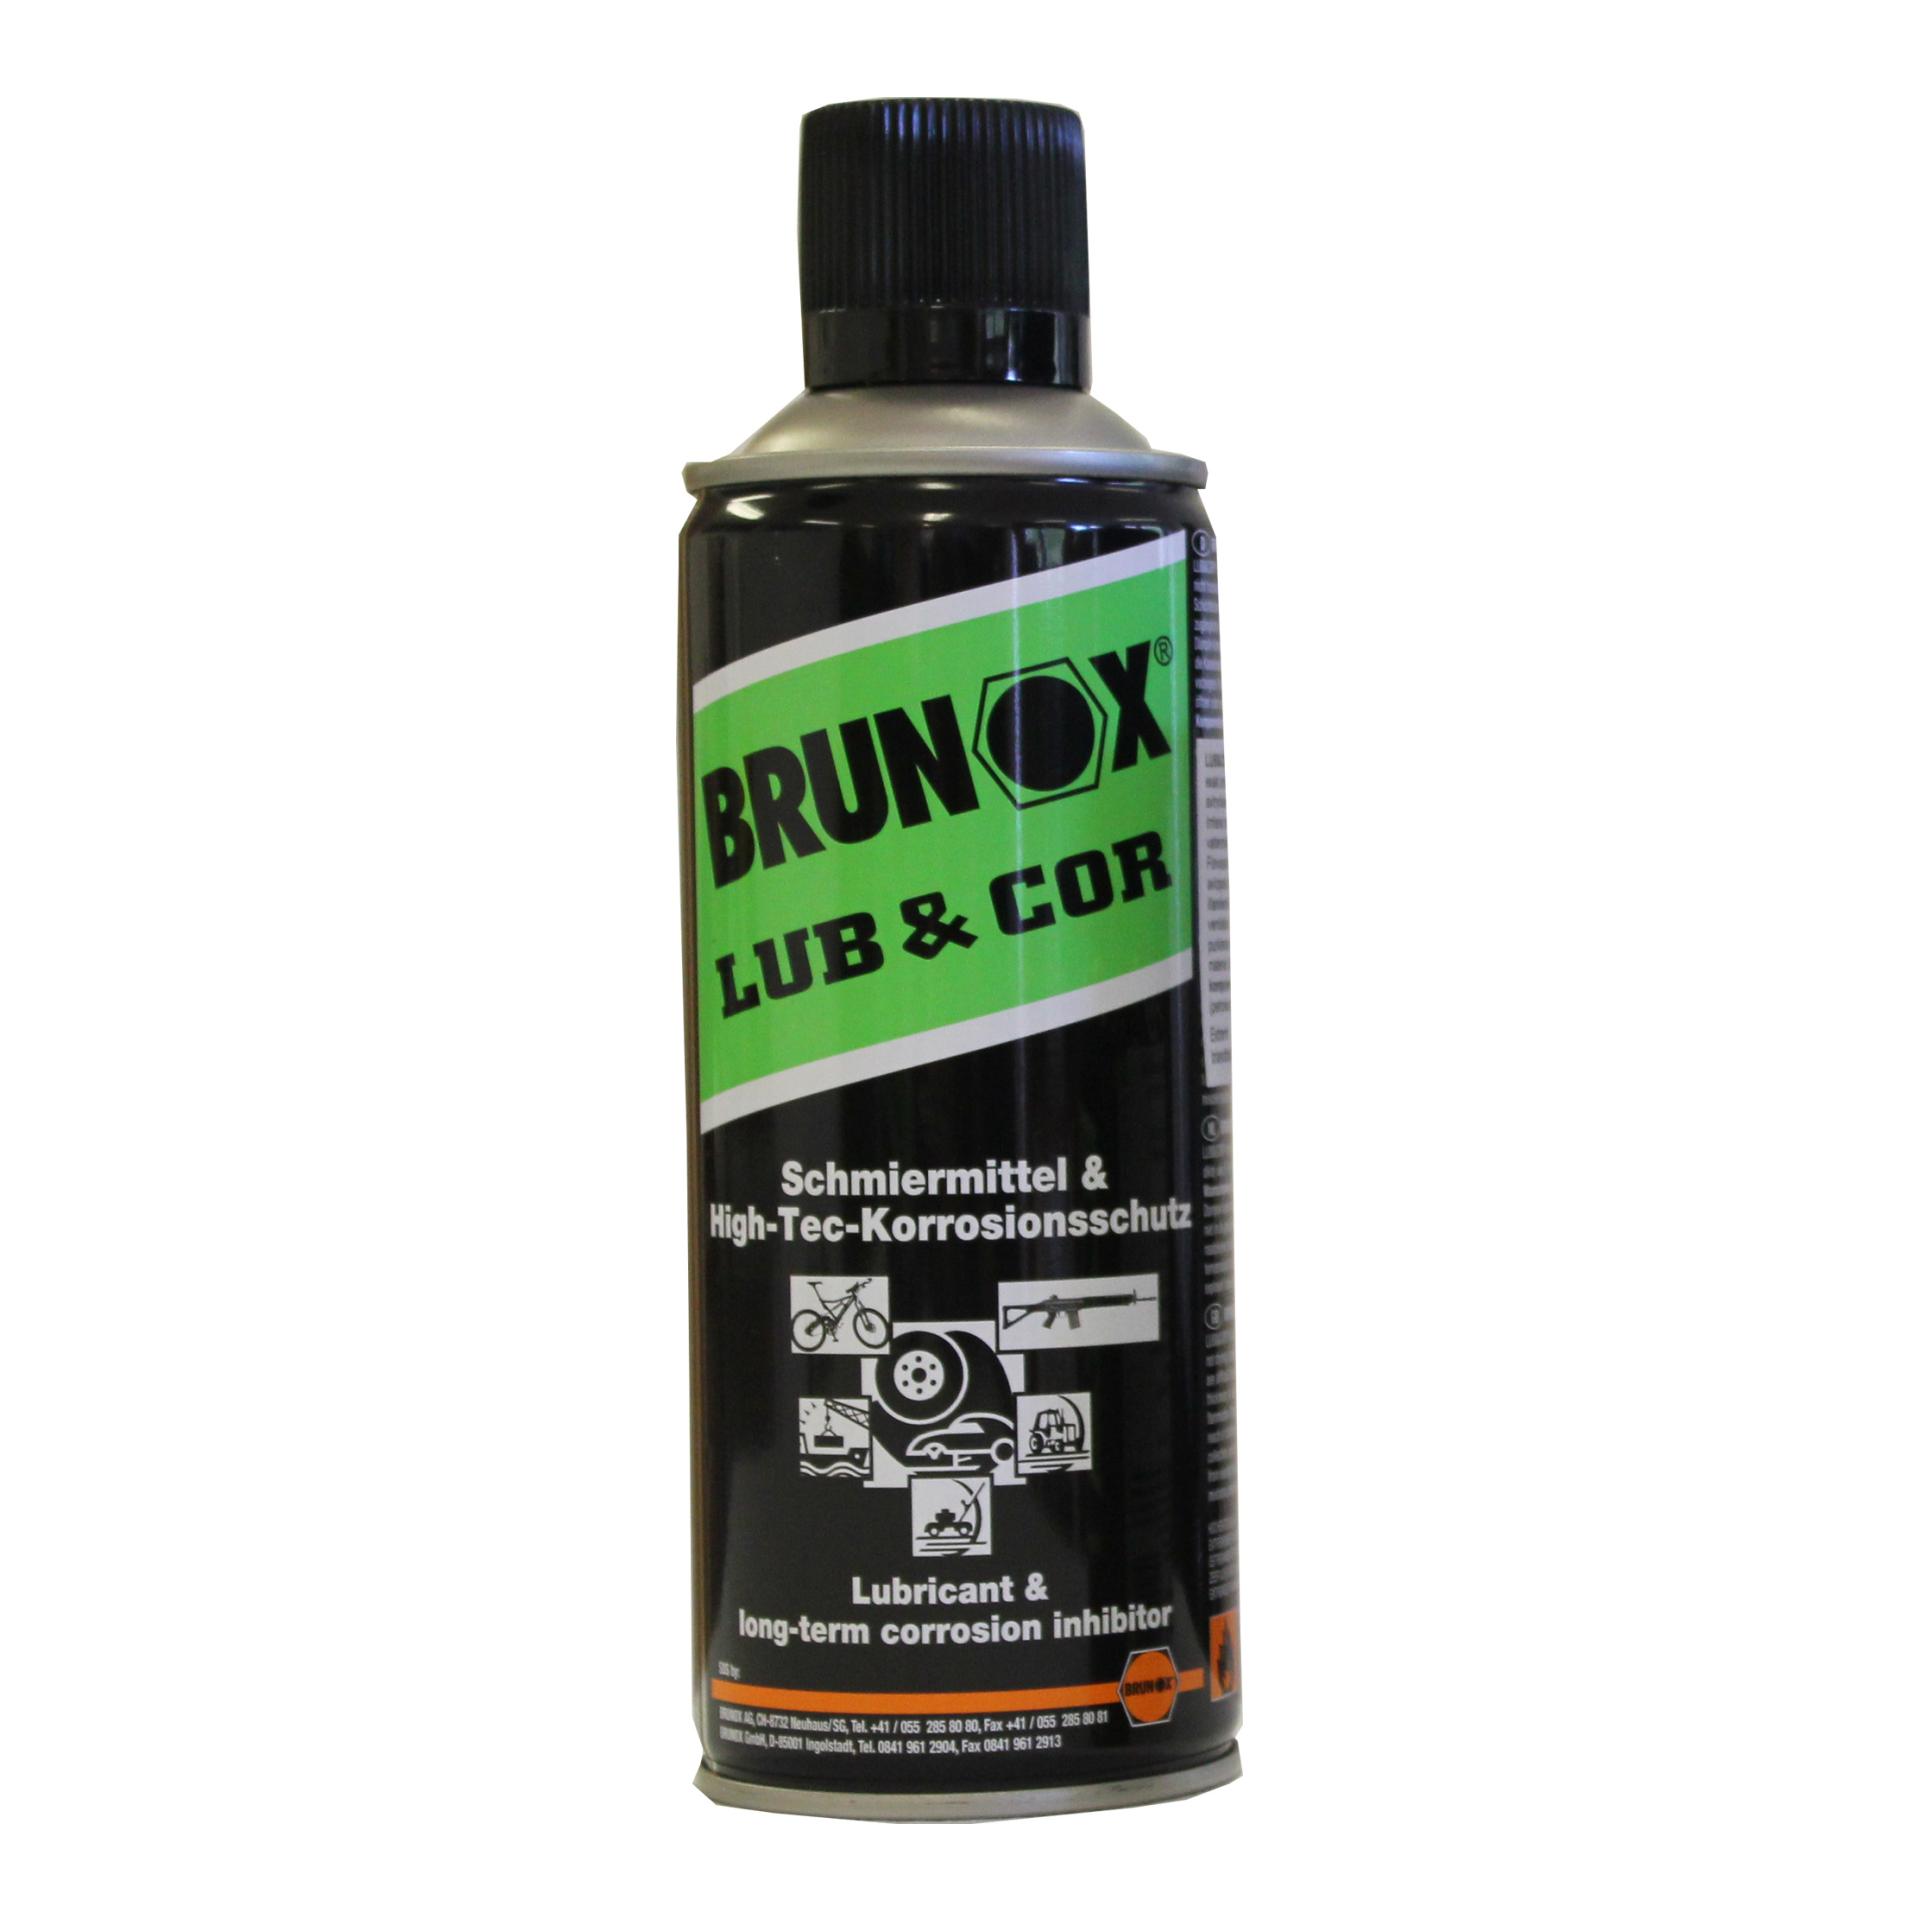 Brunox Vapenolja spray 400 ml – LUB & COR